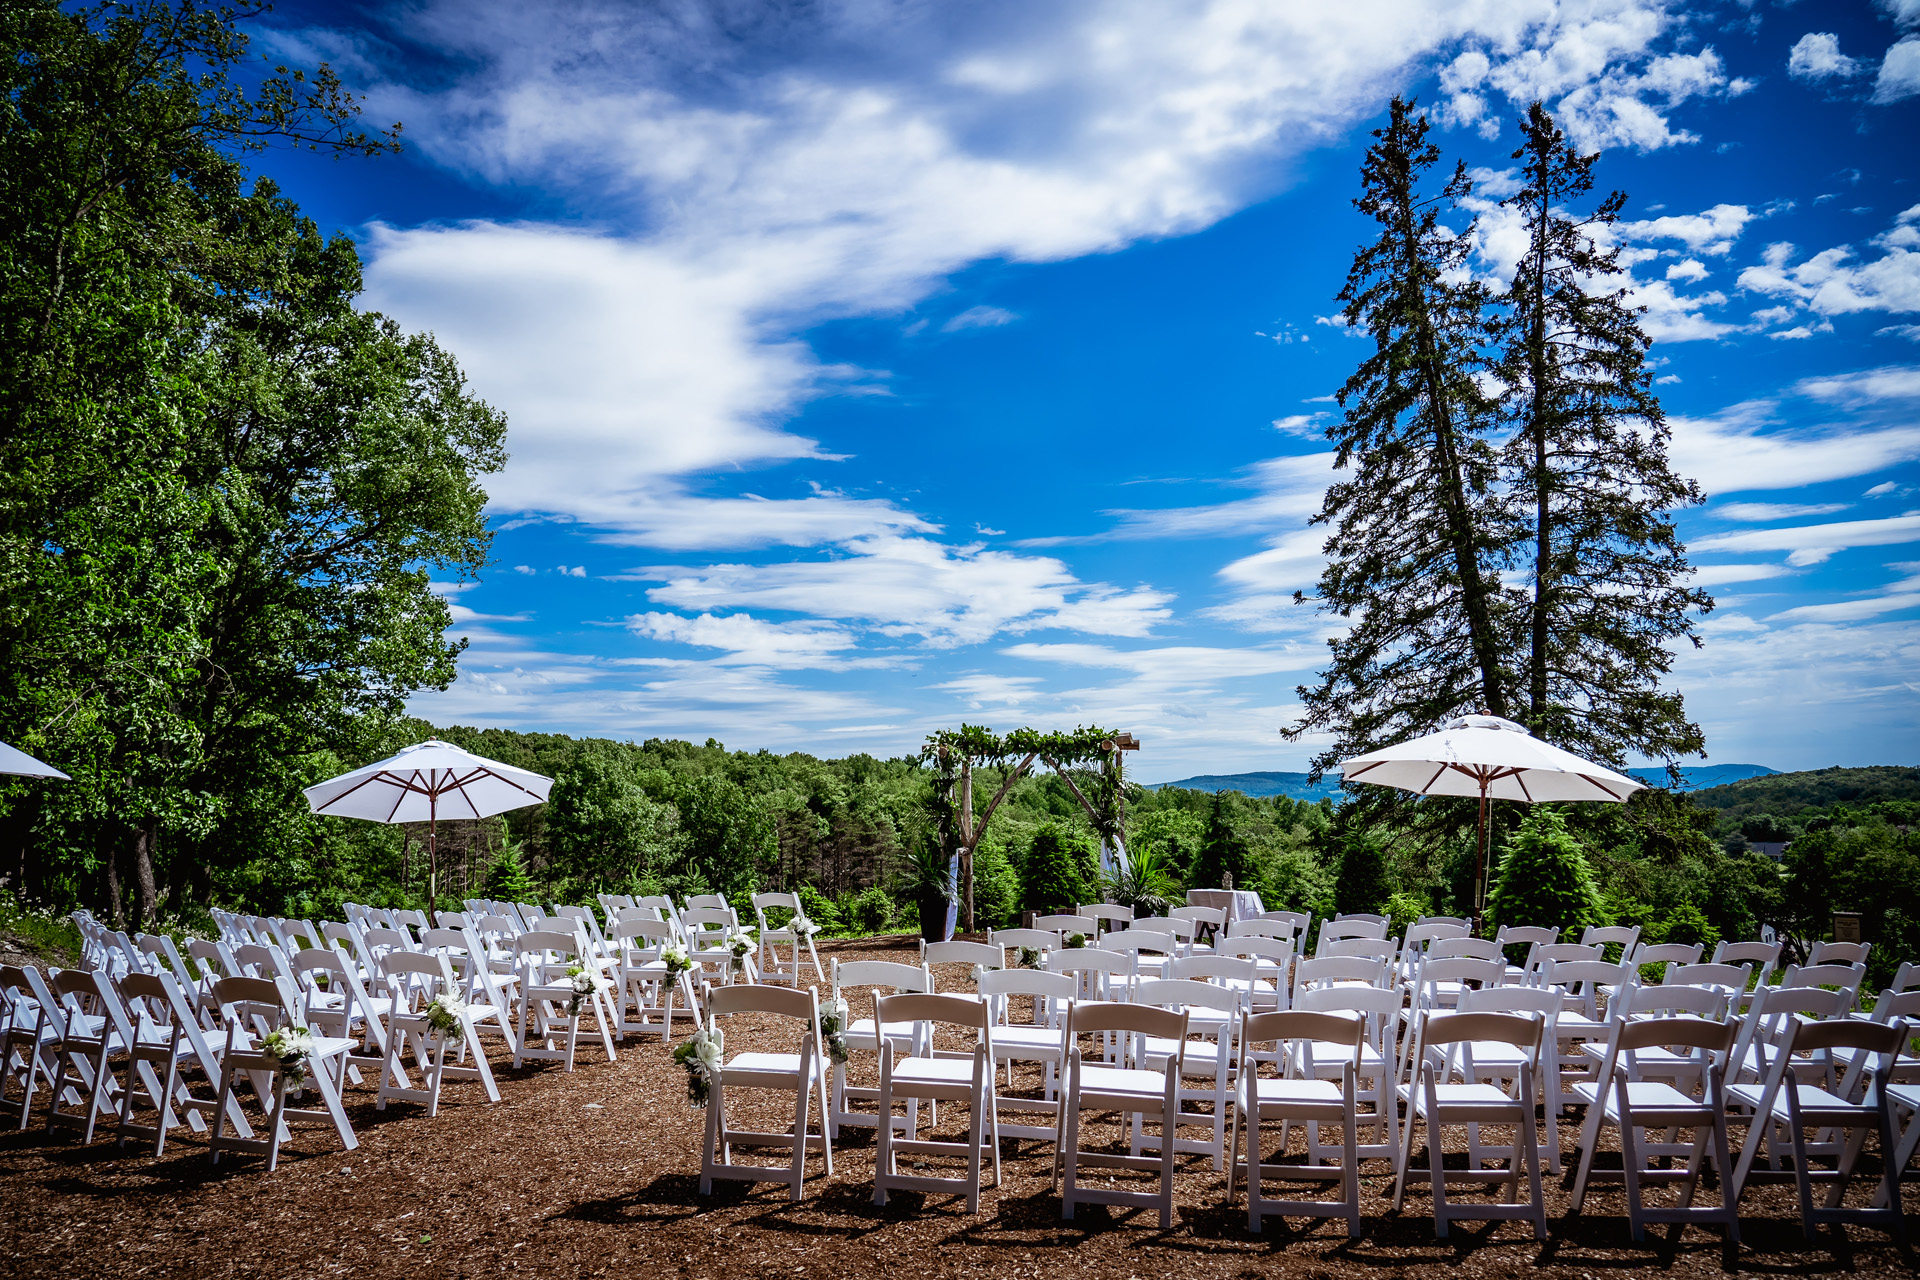 Emmerich Tree Farm Wedding Photographer 